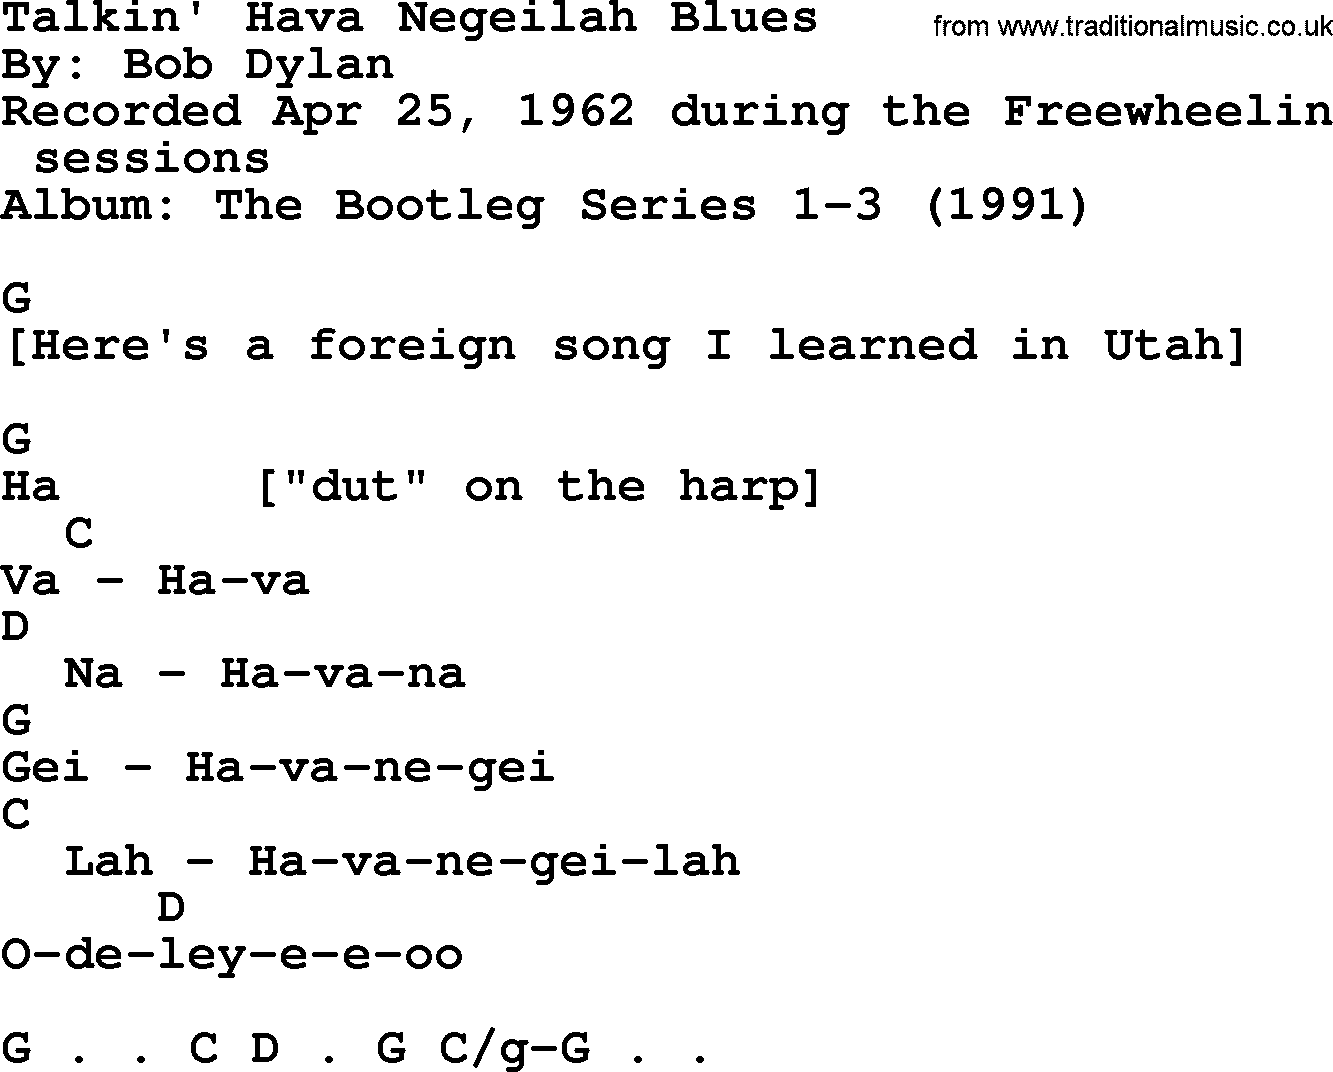 Bob Dylan song, lyrics with chords - Talkin' Hava Negeilah Blues